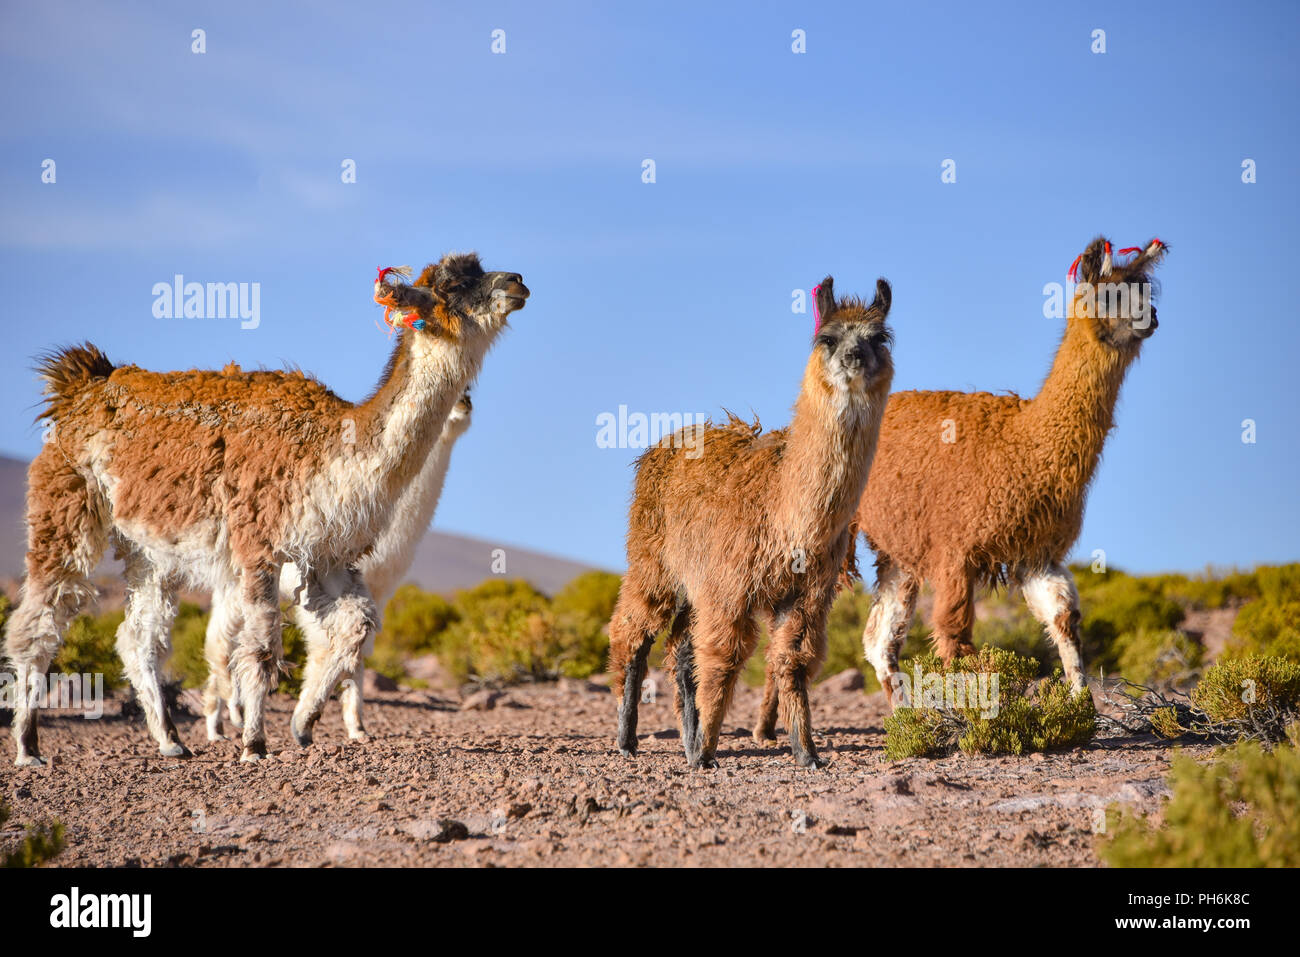 A group of Llamas and Alpacas grazing on the Altiplano, in the Eduardo Avaroa National Reserve, Uyuni, Bolivia Stock Photo